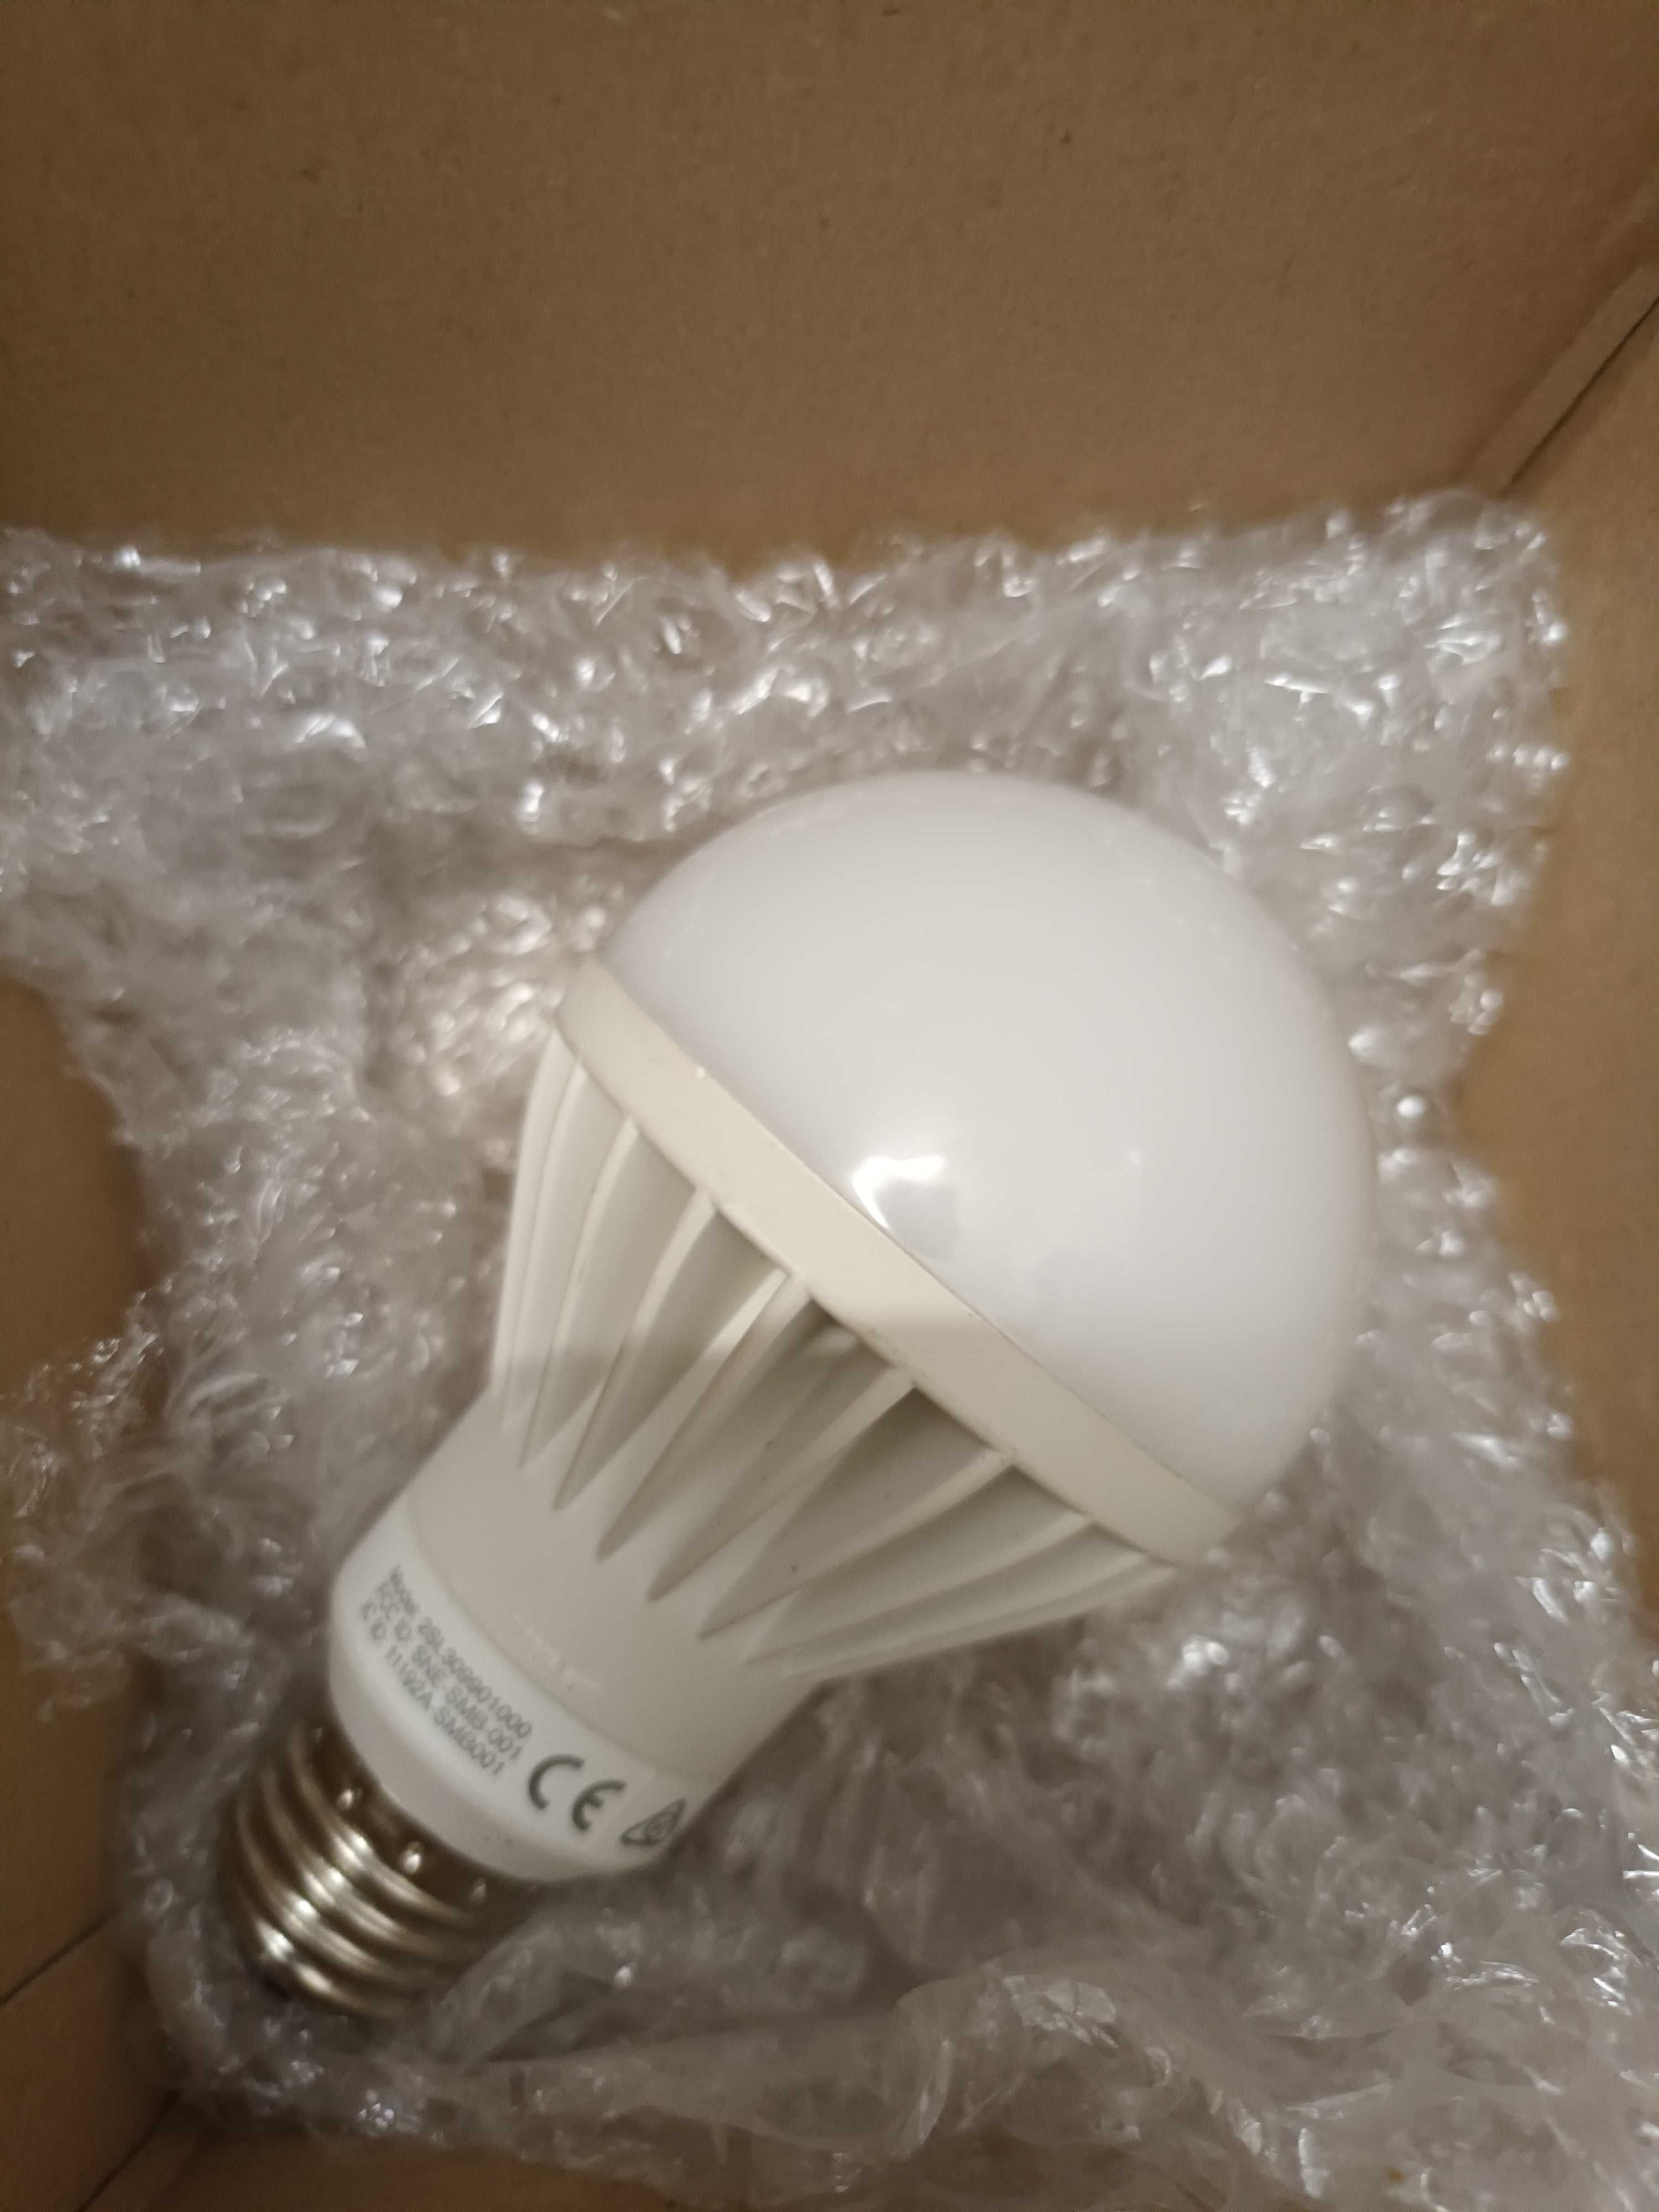 ELGATO AVEA LED Bulb E2707-C0490